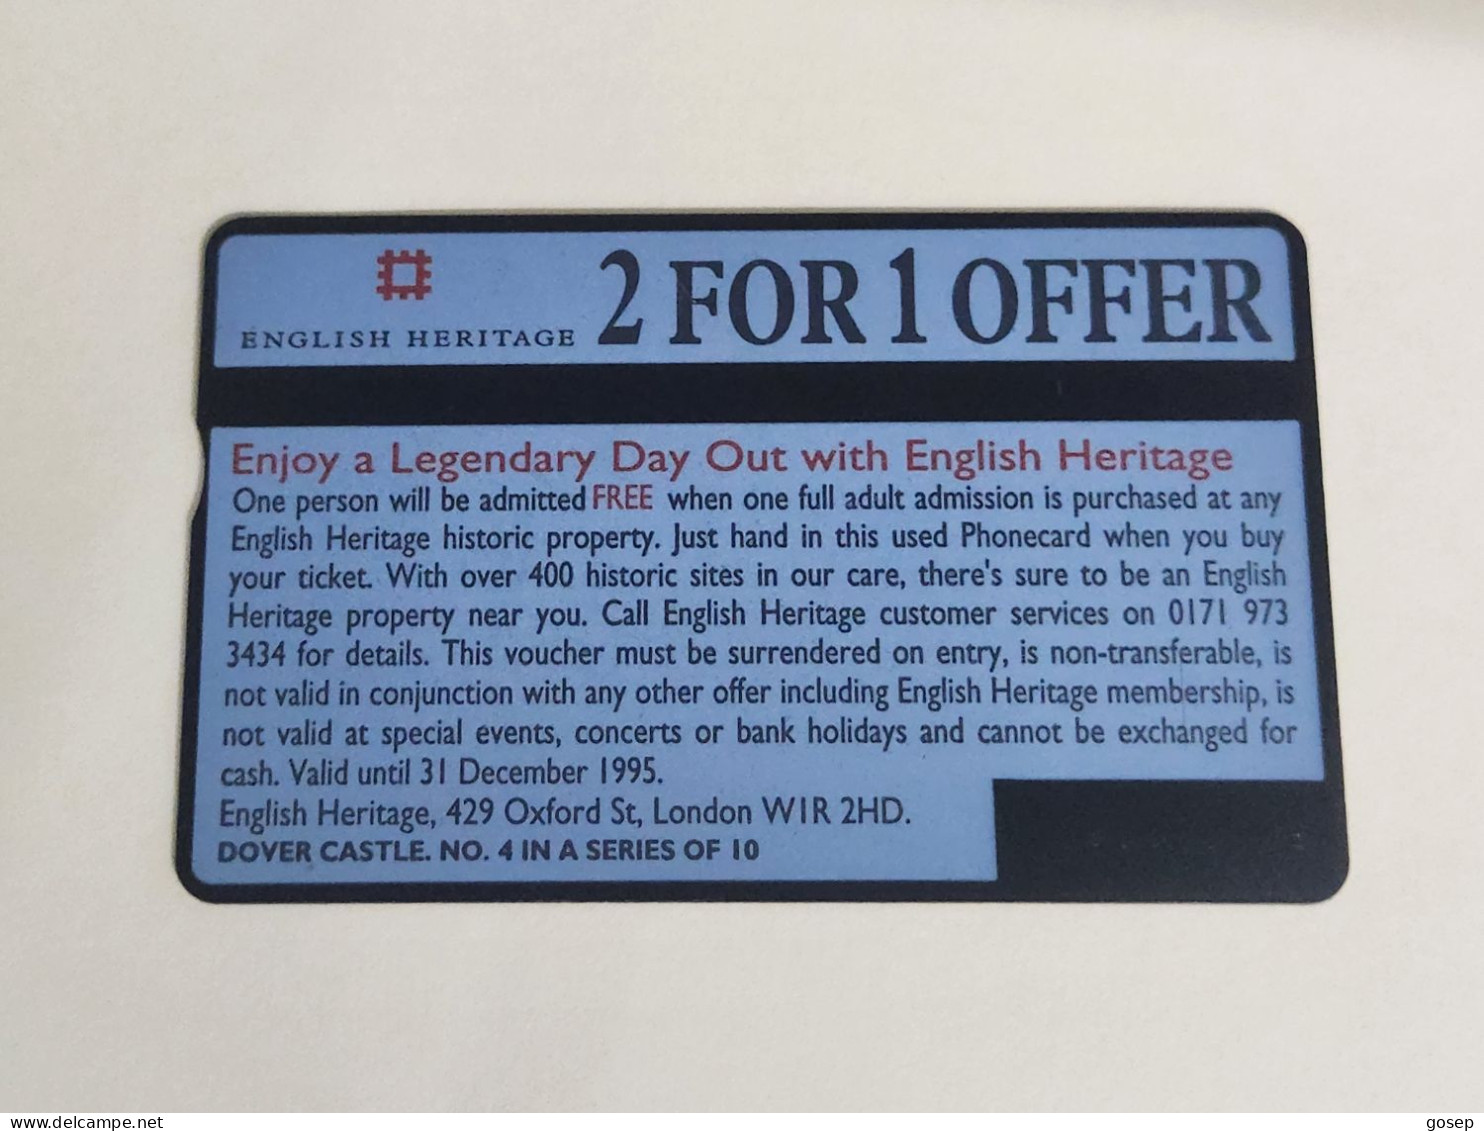 United Kingdom-(BTA106)-HERITAGE-Dover Castle-(174)(50units)(528F22166)price Cataloge3.00£-used+1card Prepiad Free - BT Advertising Issues